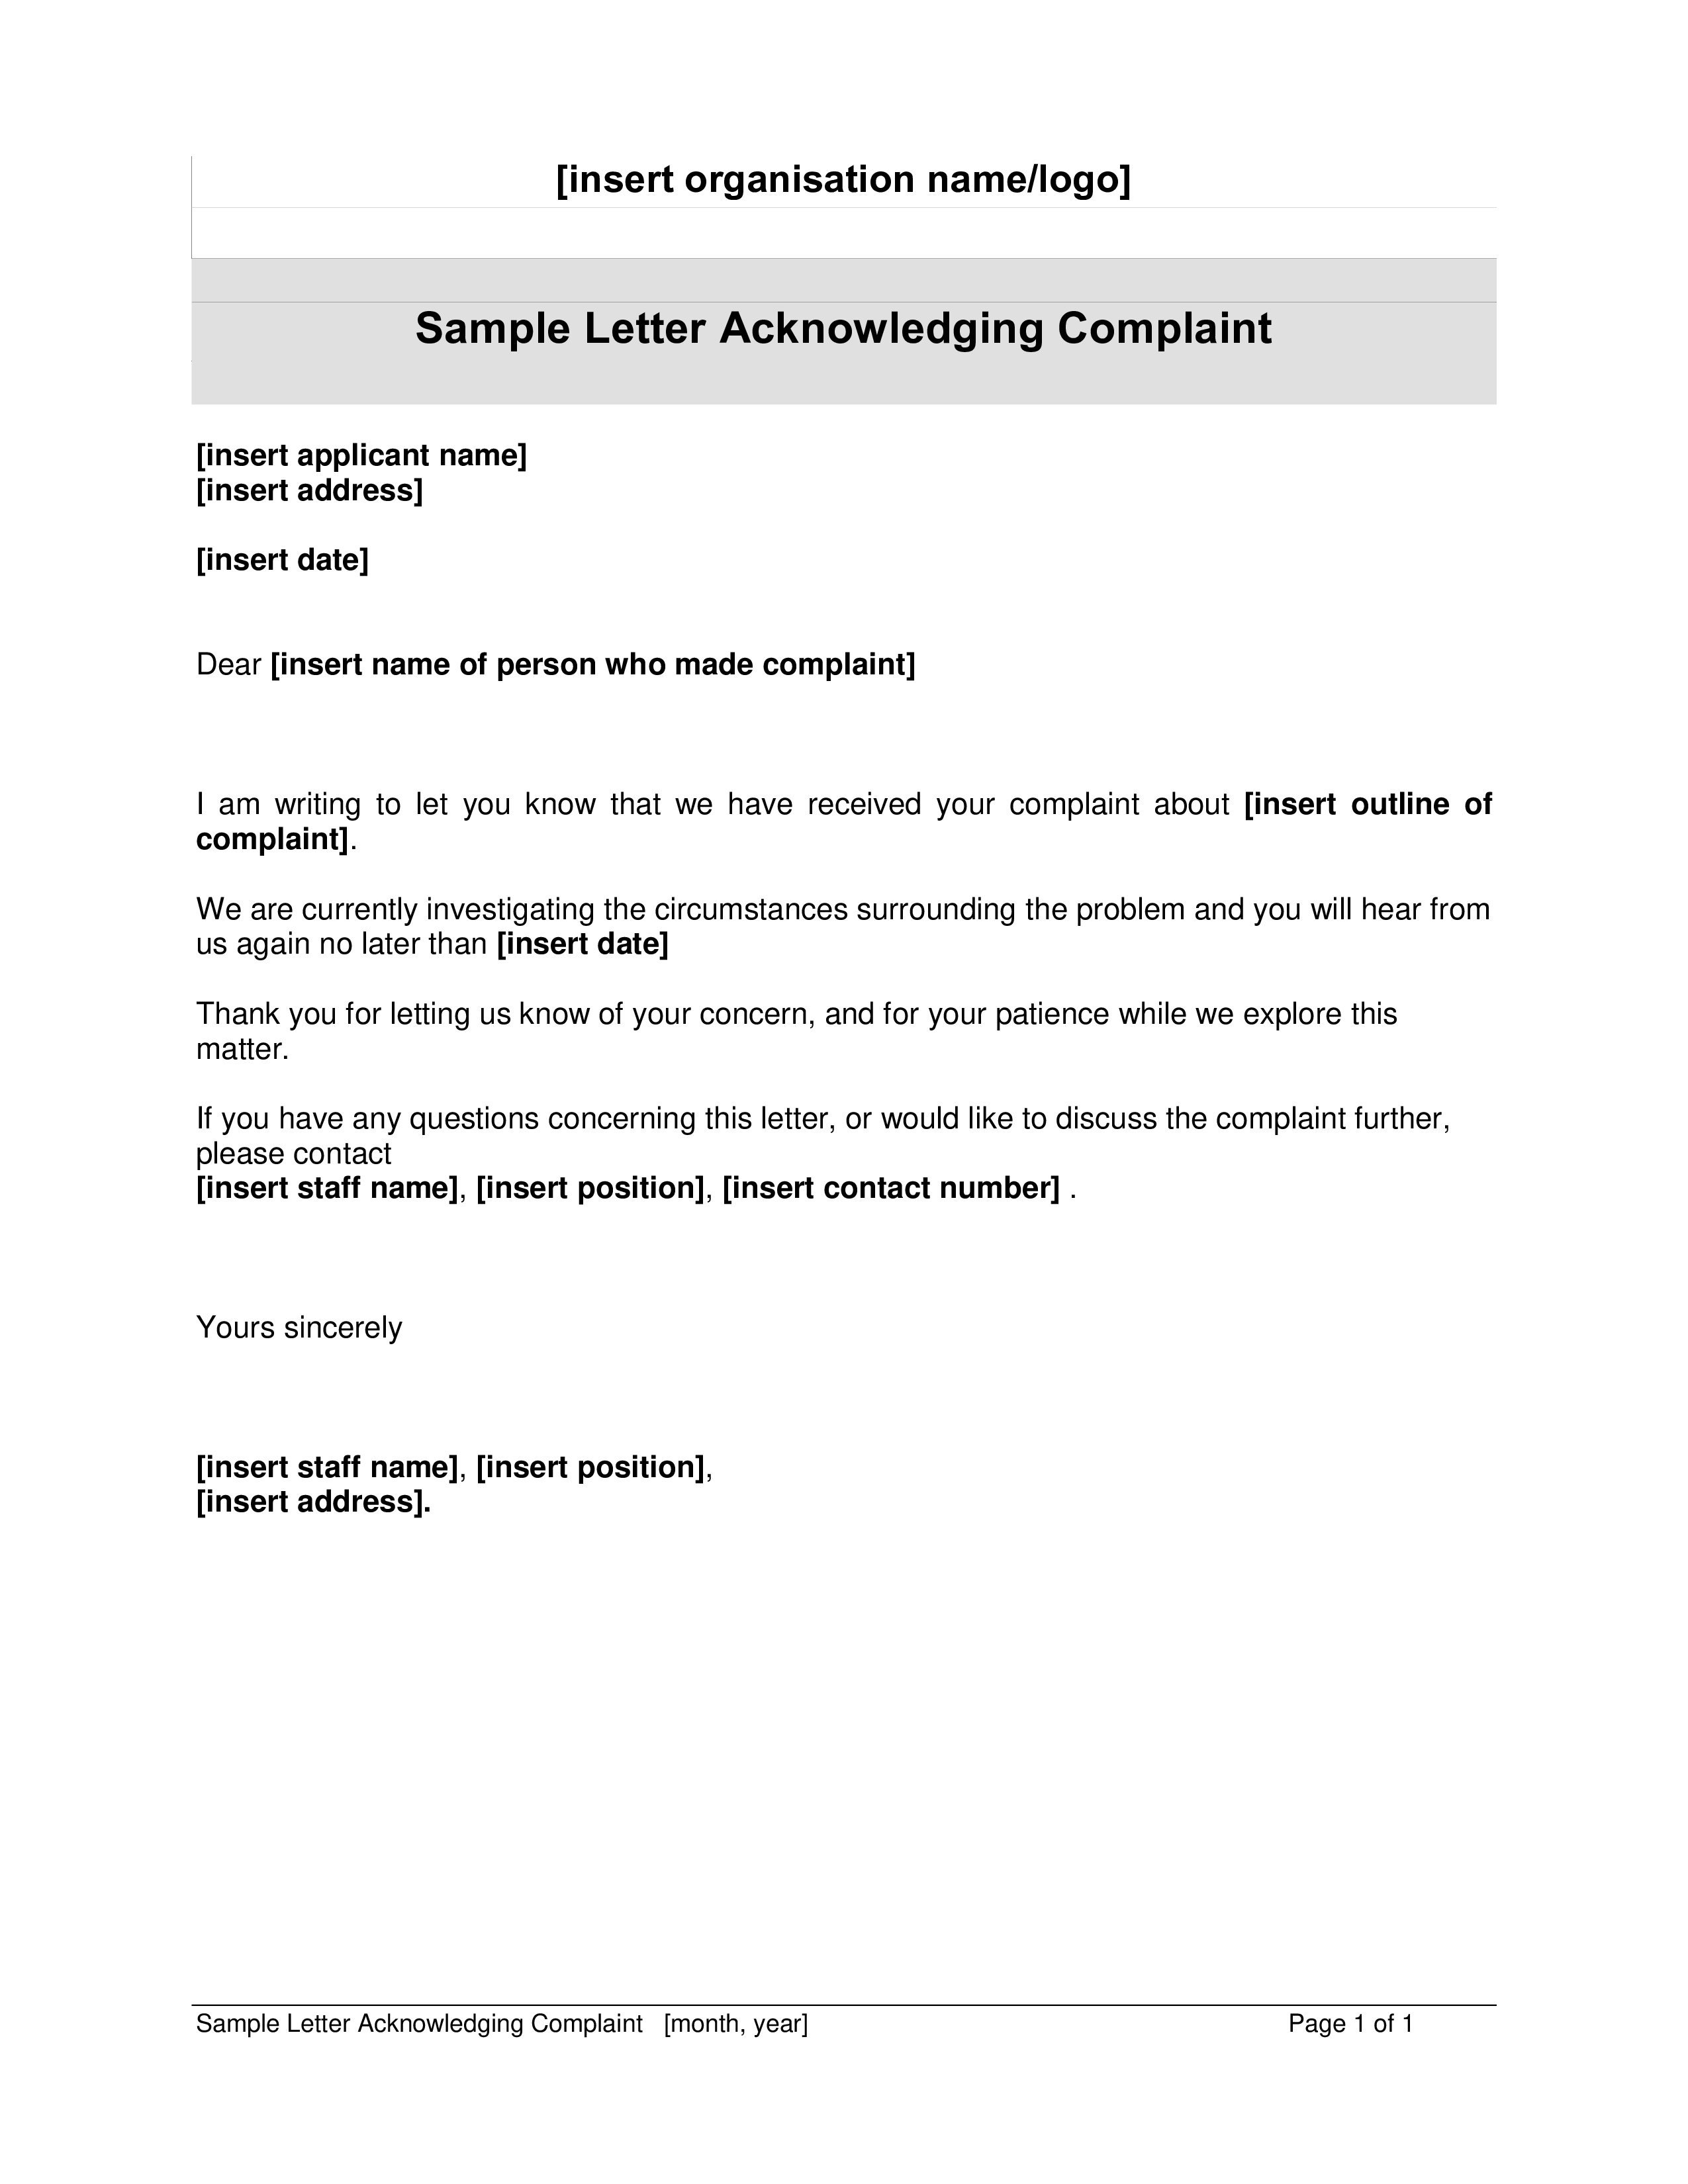 Employee Complaint Acknowledgement Letter main image